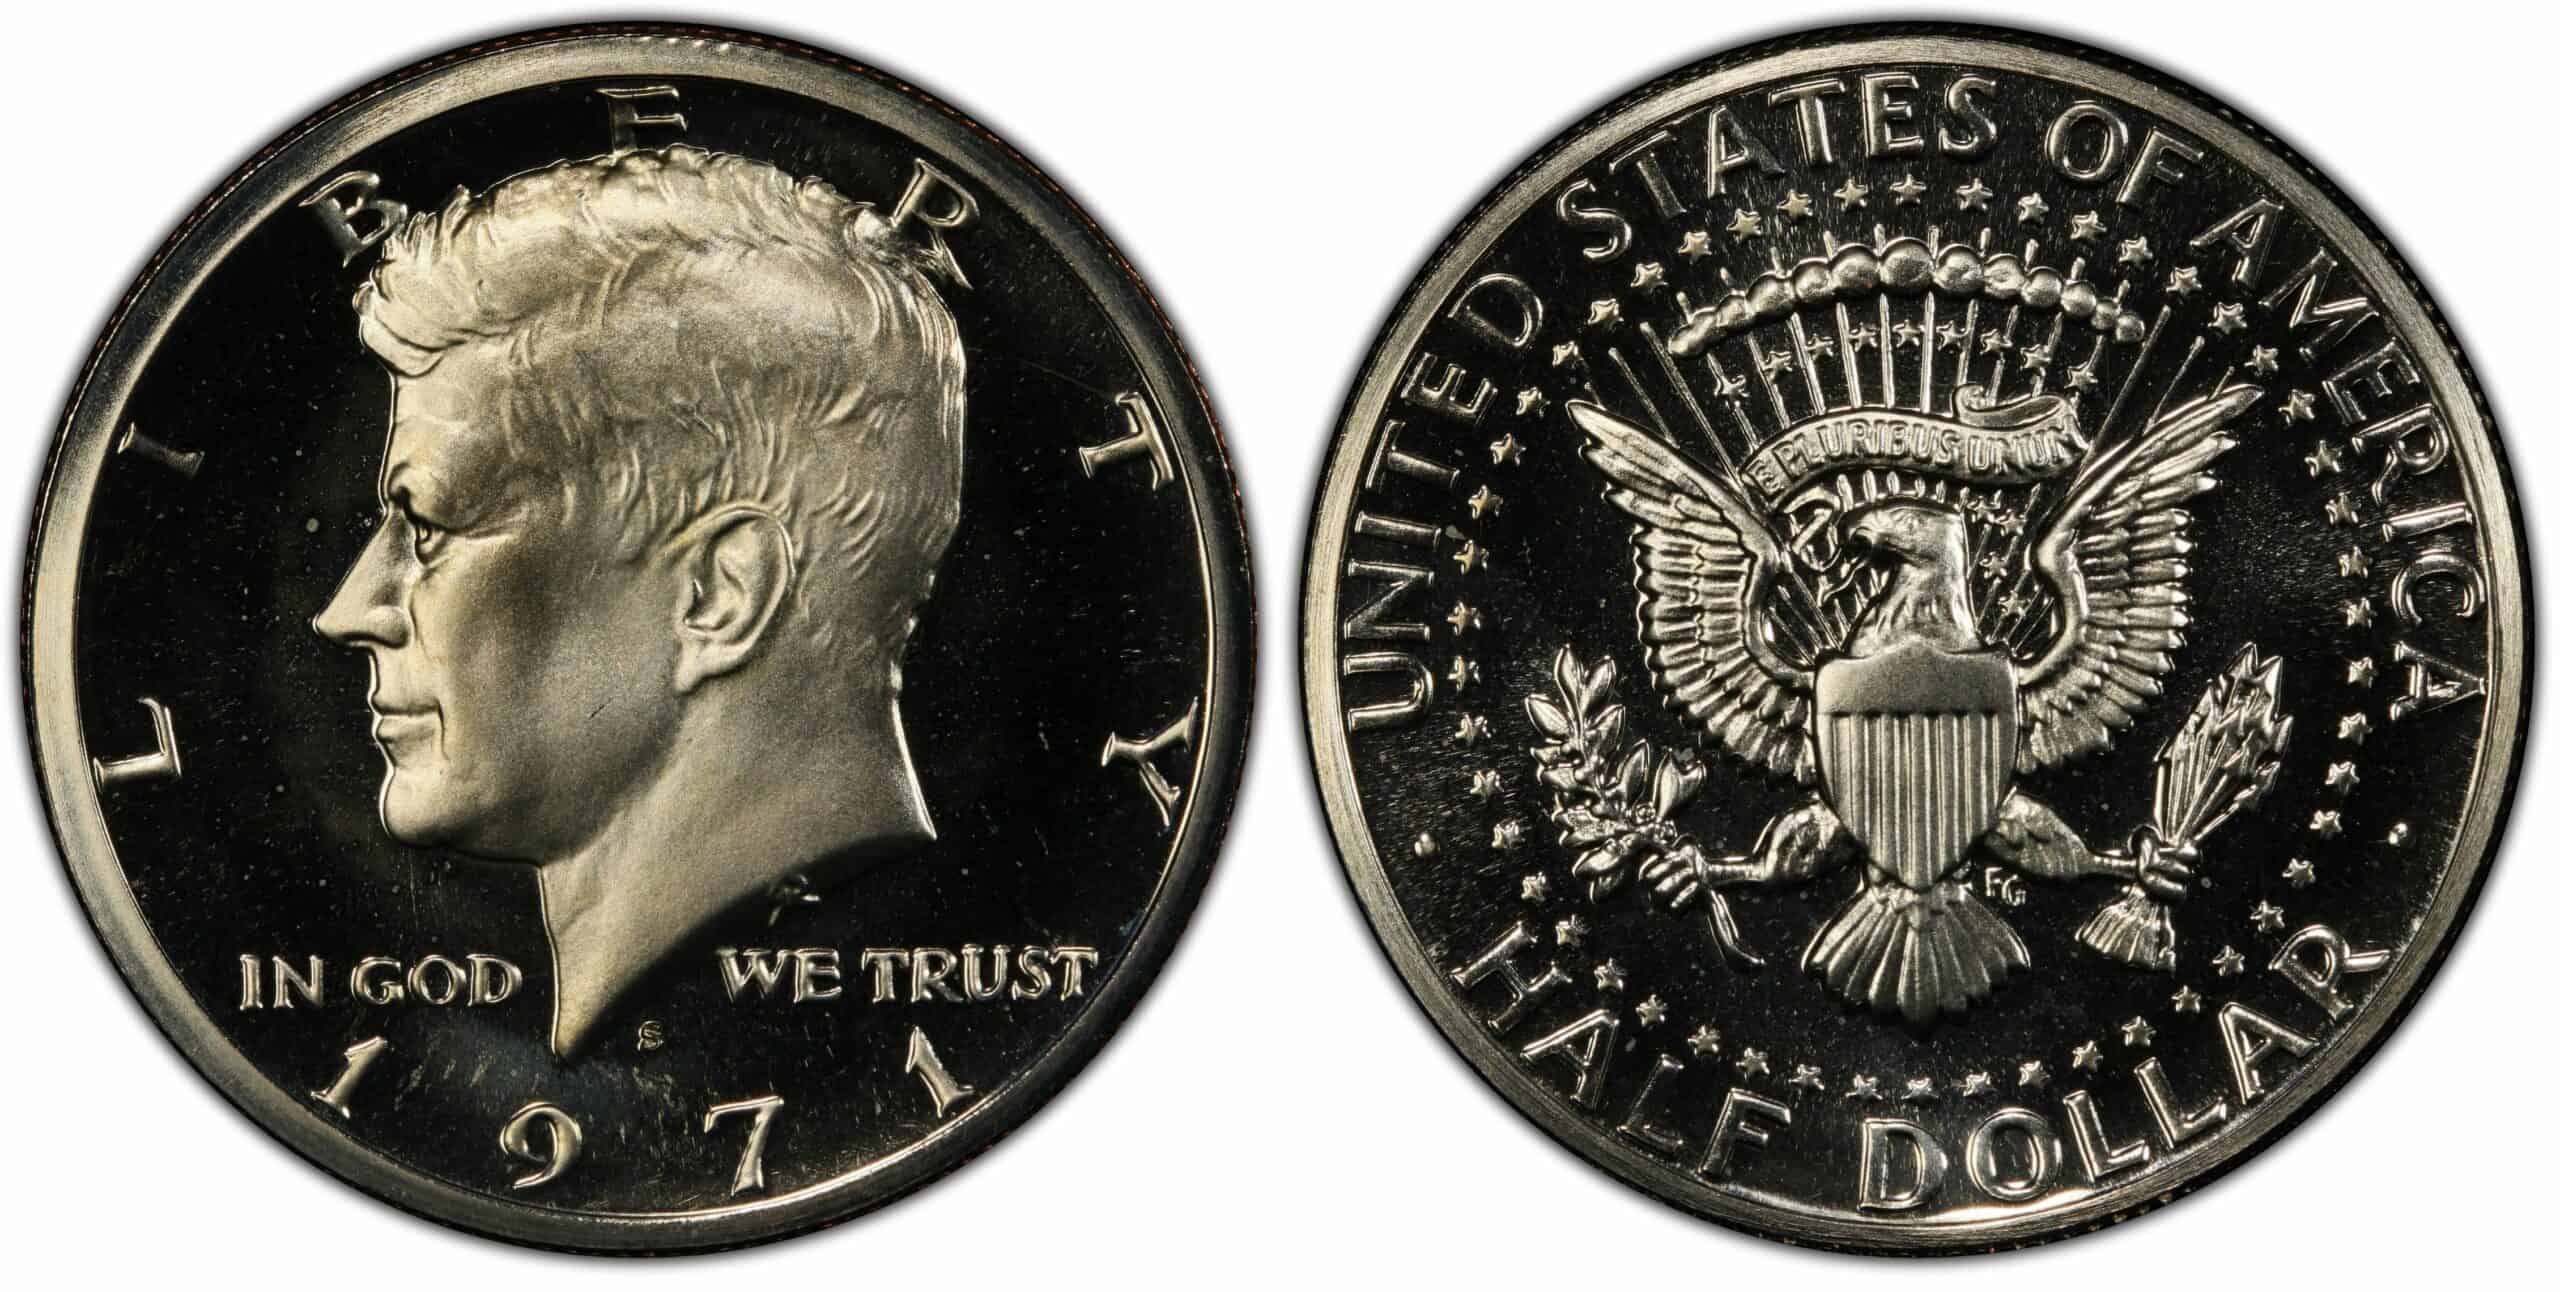 1971 S proof Kennedy half-dollar